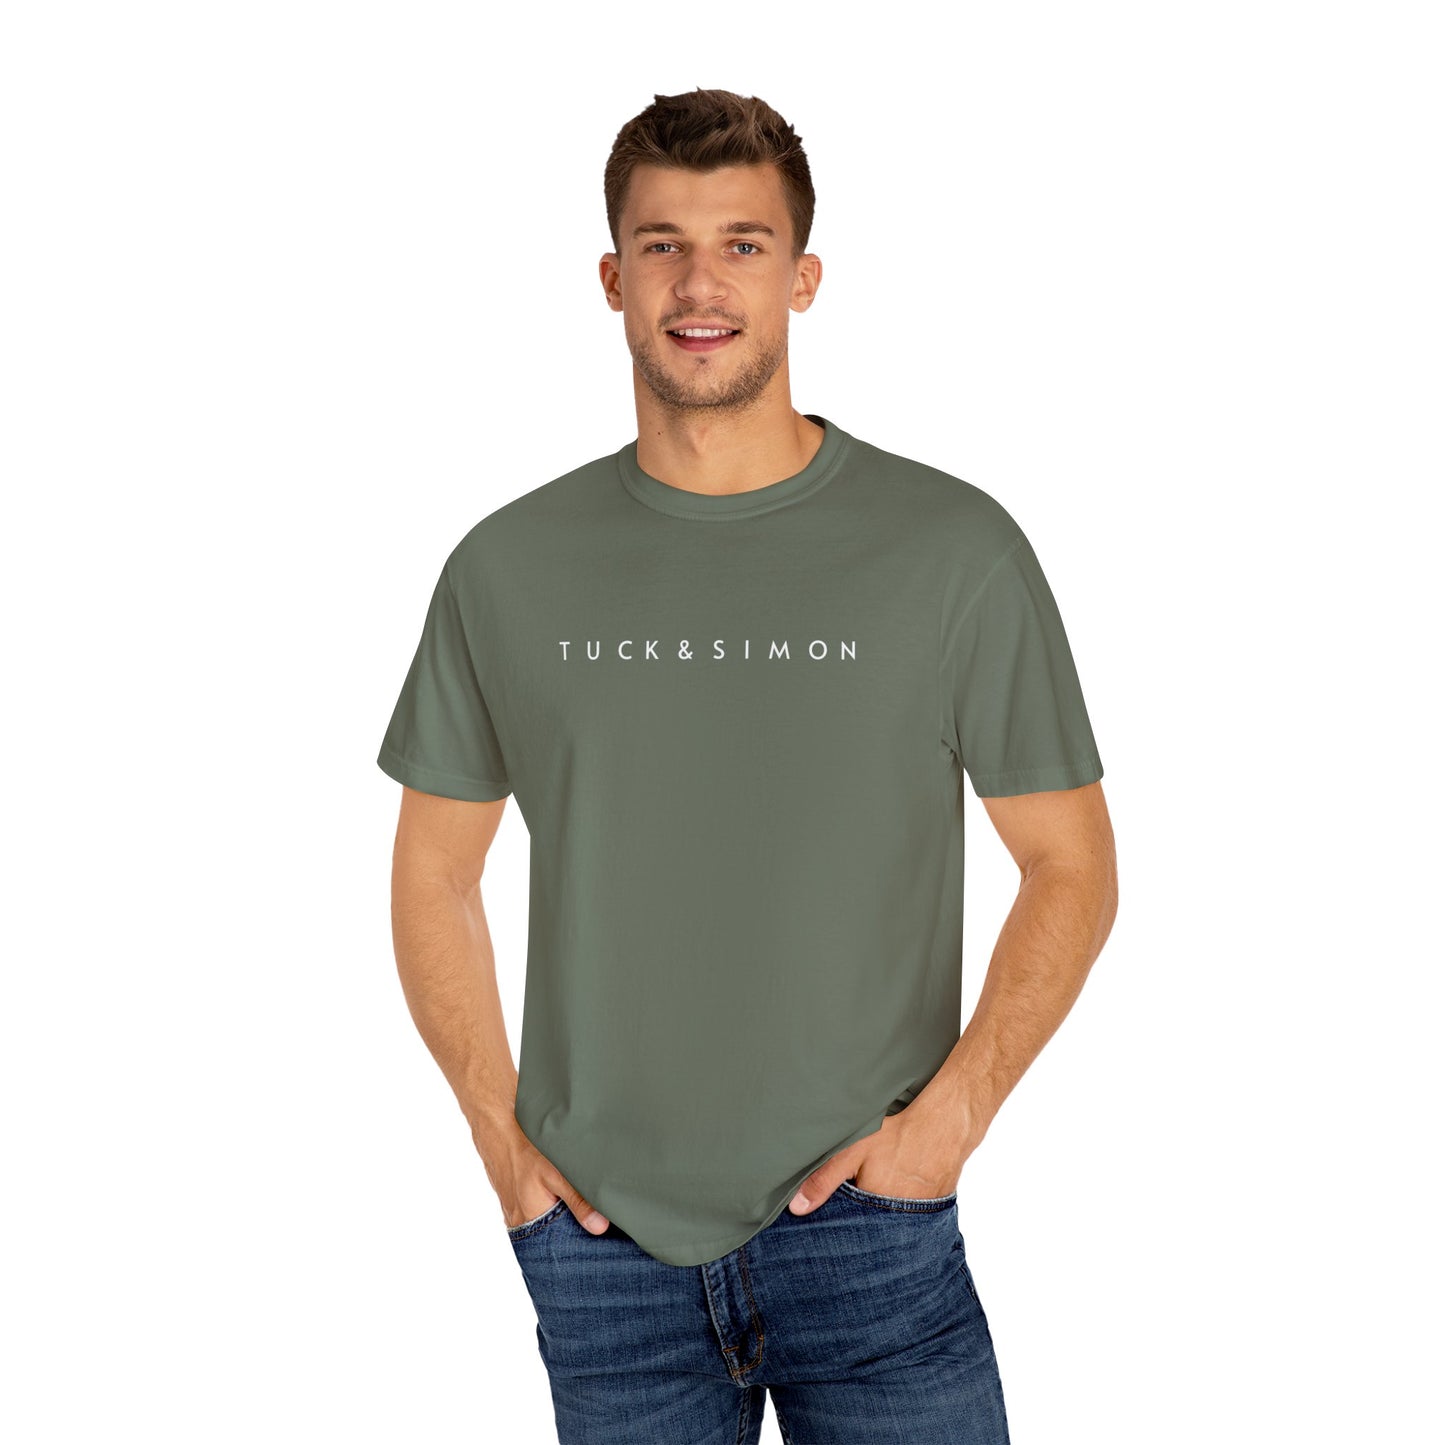 S - 3XL Tuck&Simon Classic T-Shirt